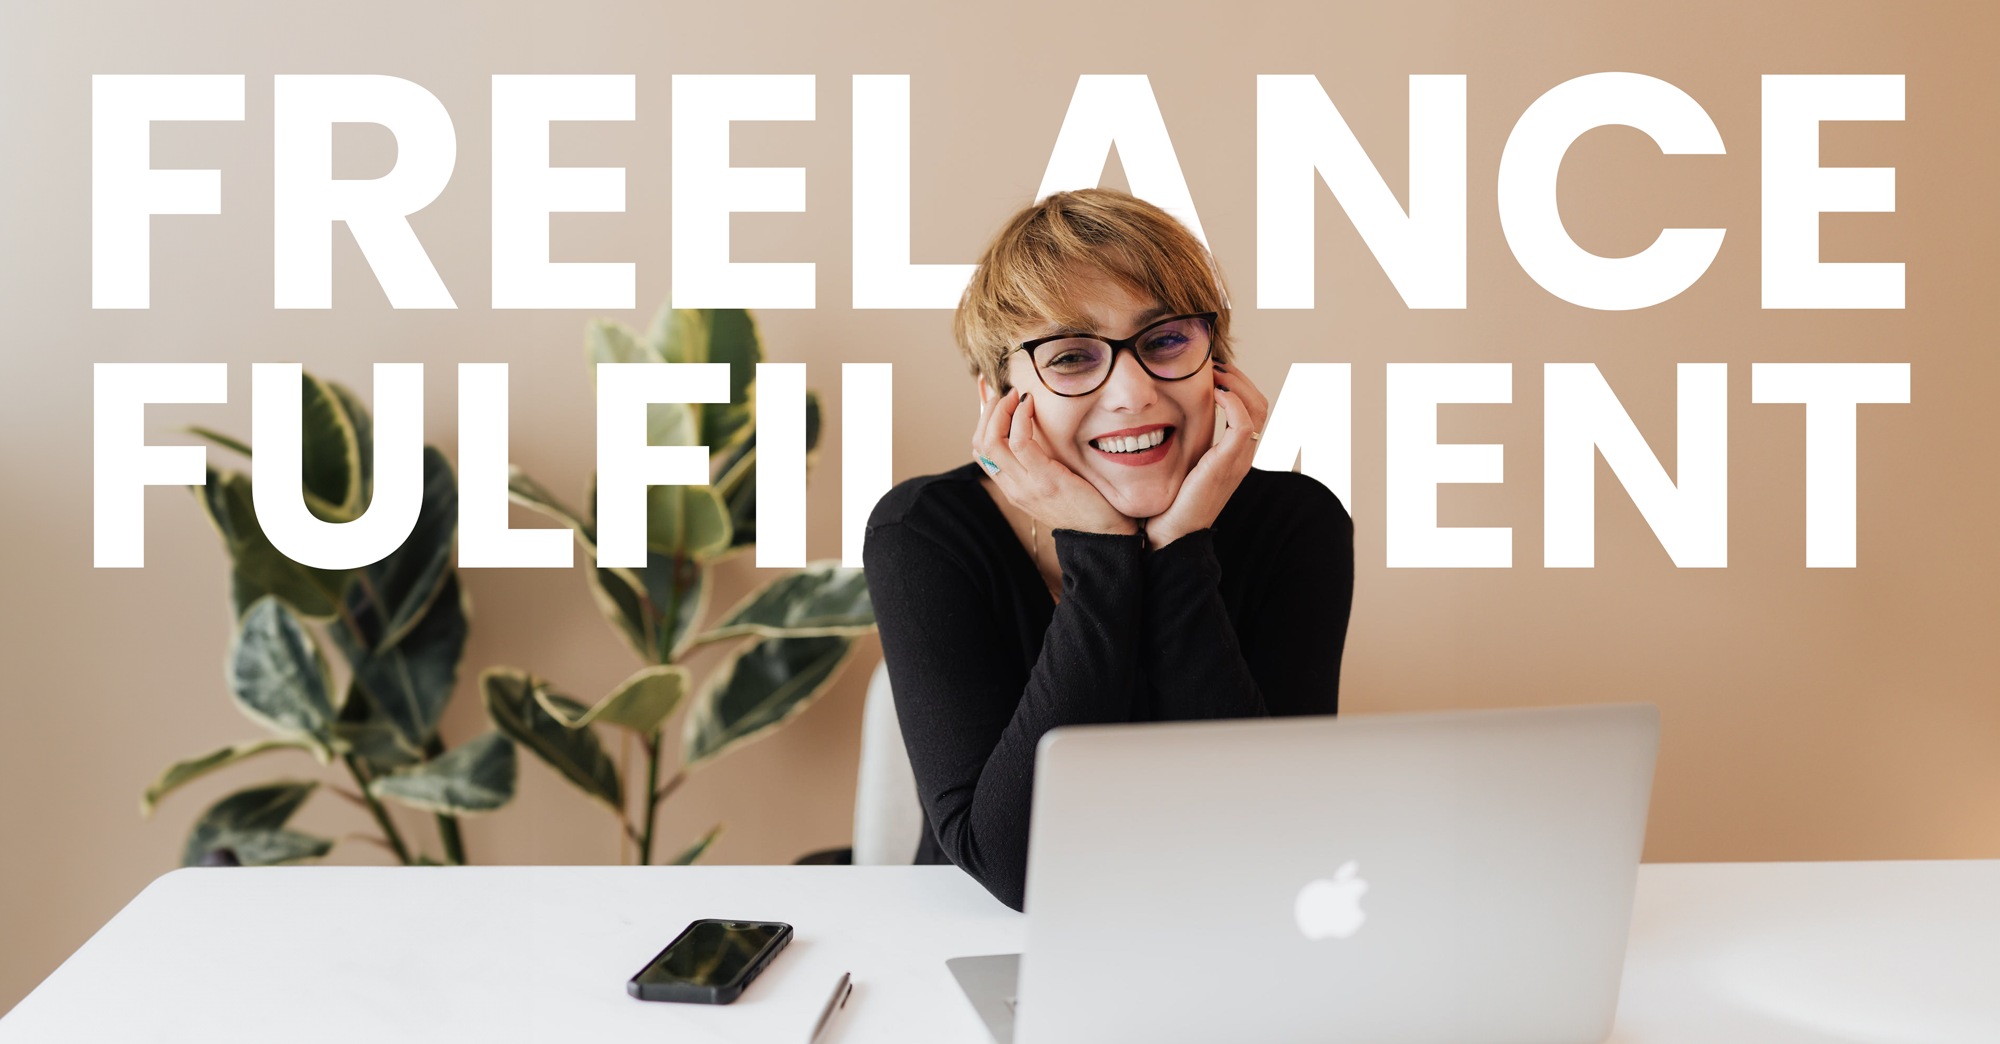 fulfillment as a freelancer